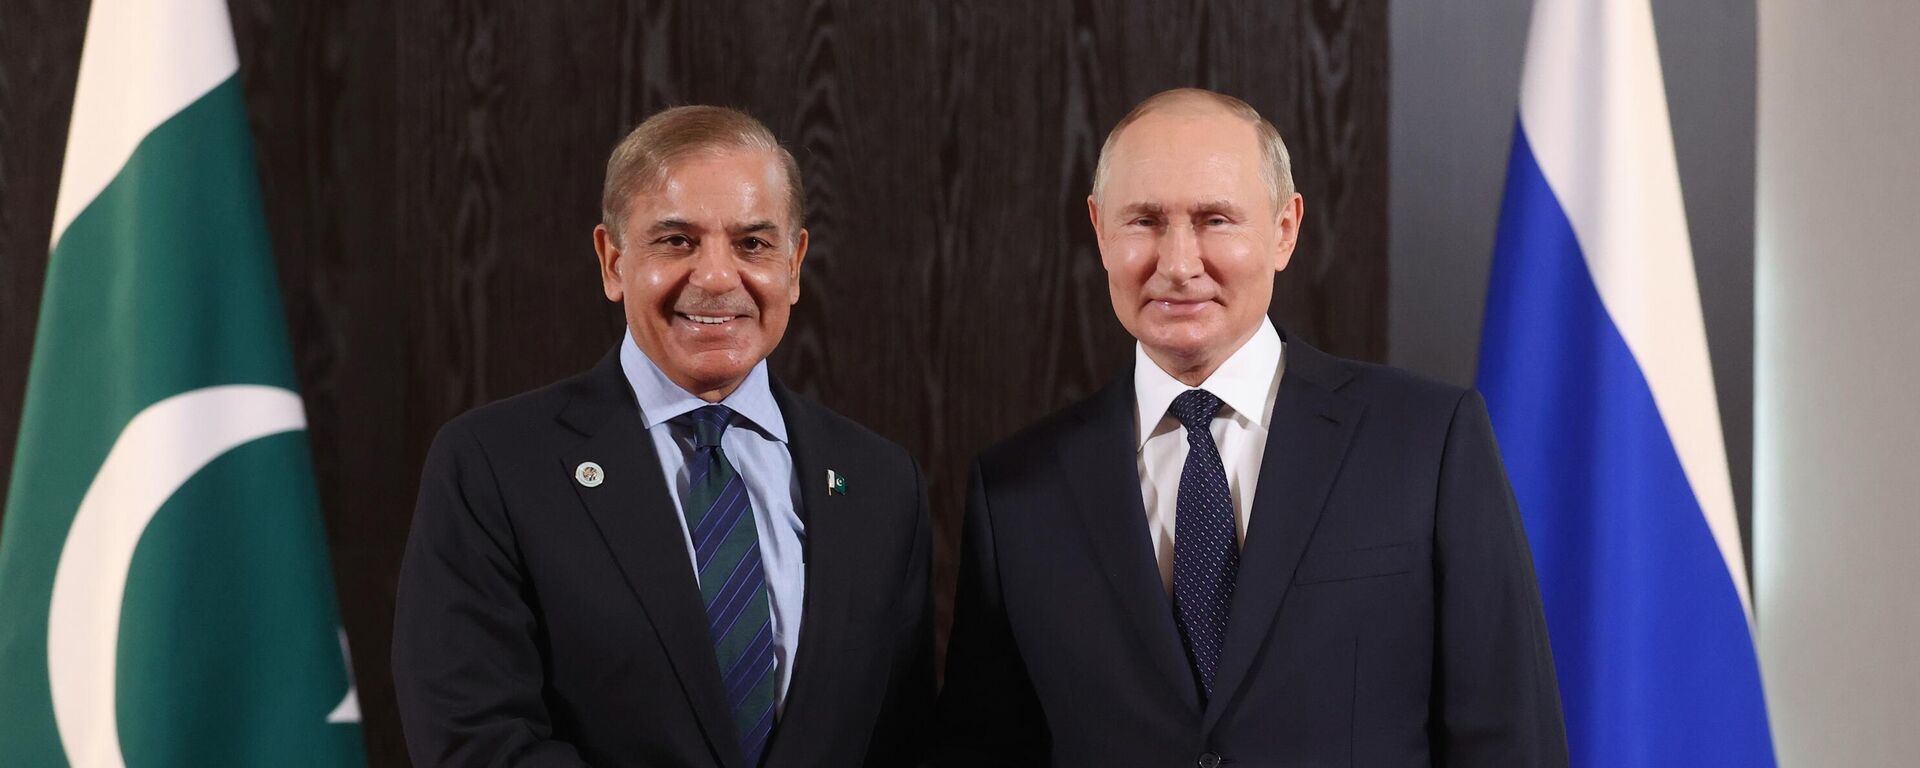 El primer ministro de Pakistán, Shehbaz Sharif y el presidente de Rusia, Vladímir Putin  - Sputnik Mundo, 1920, 15.09.2022